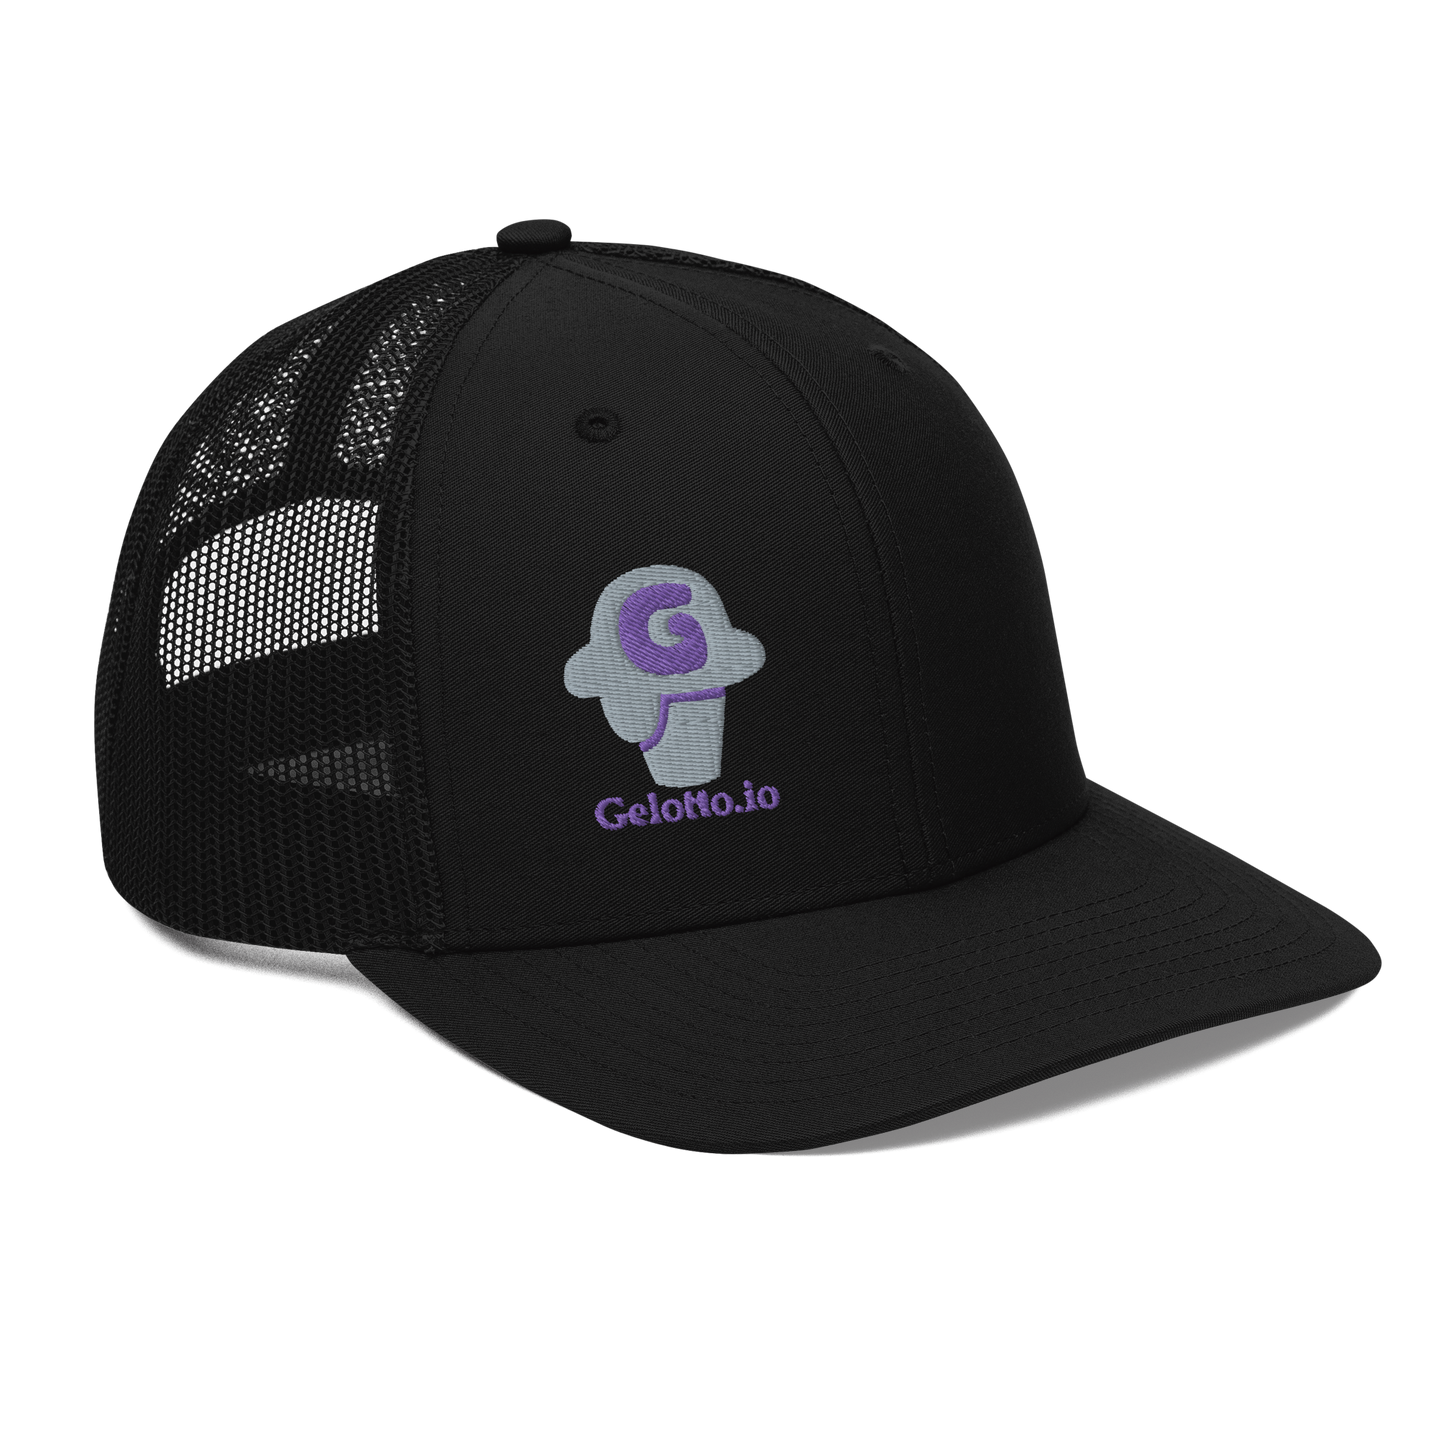 Gelotto logo Trucker Cap (purple and grey logo)